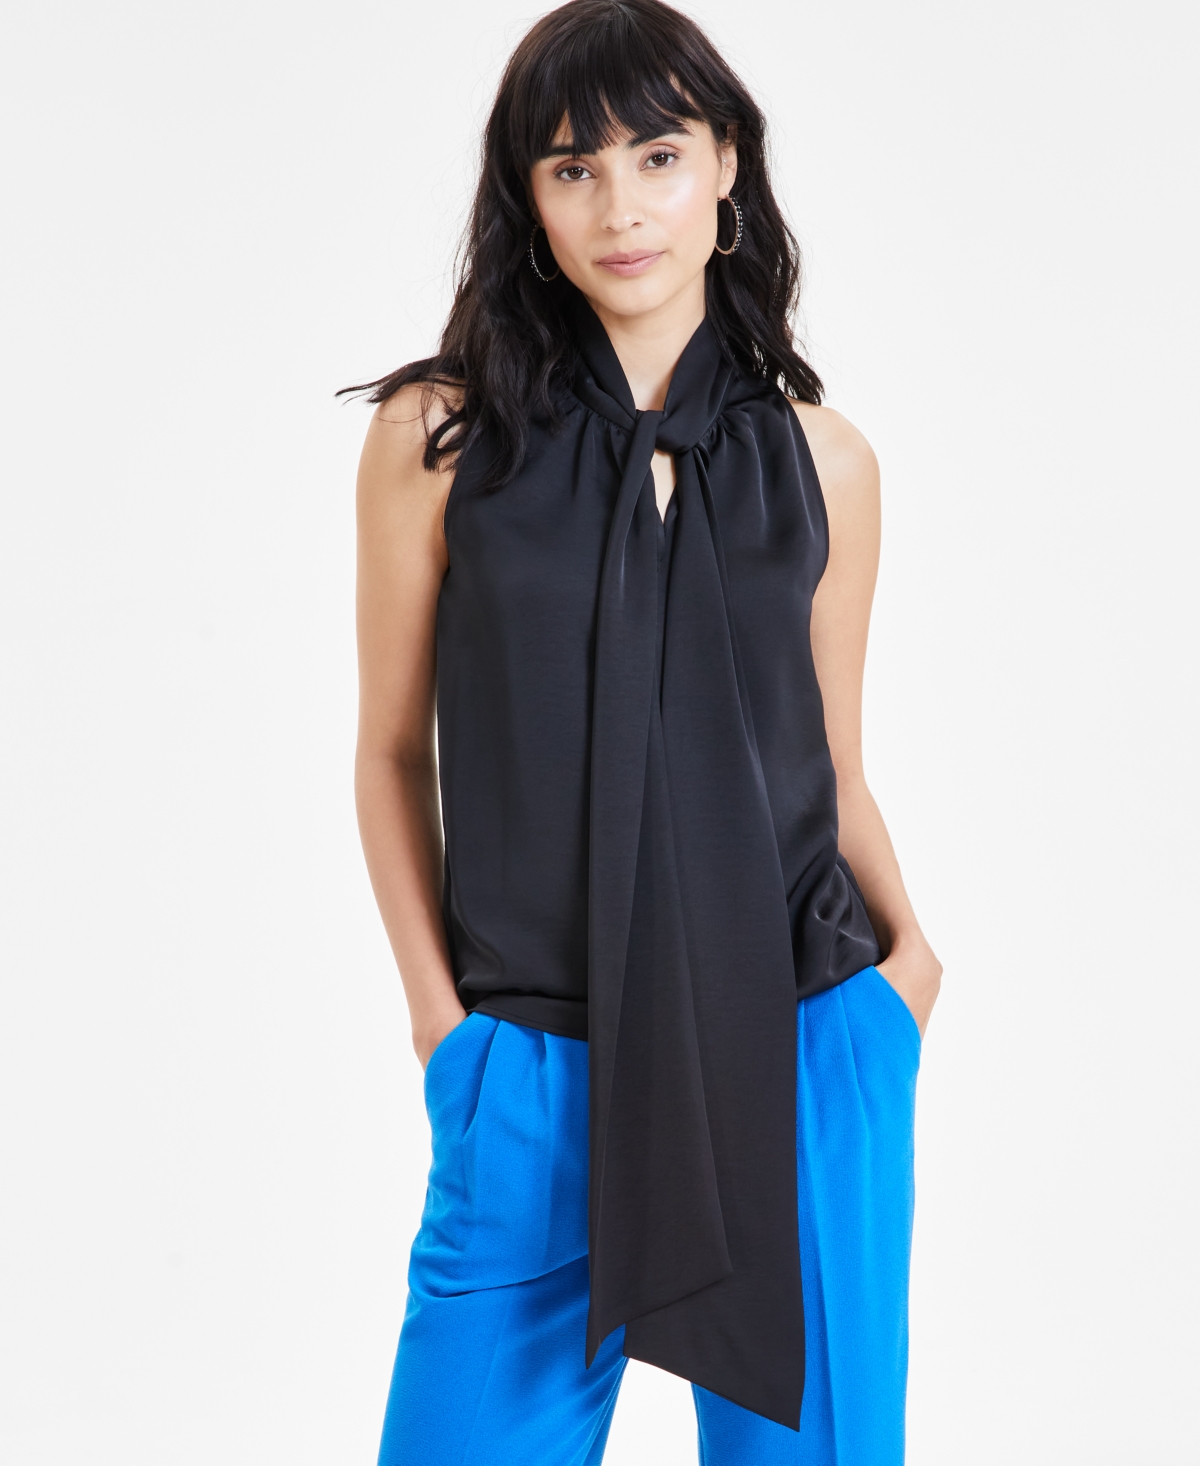 Women's Sleeveless Tie-Neck Blouse, Created for Macy's - Sunset Rose